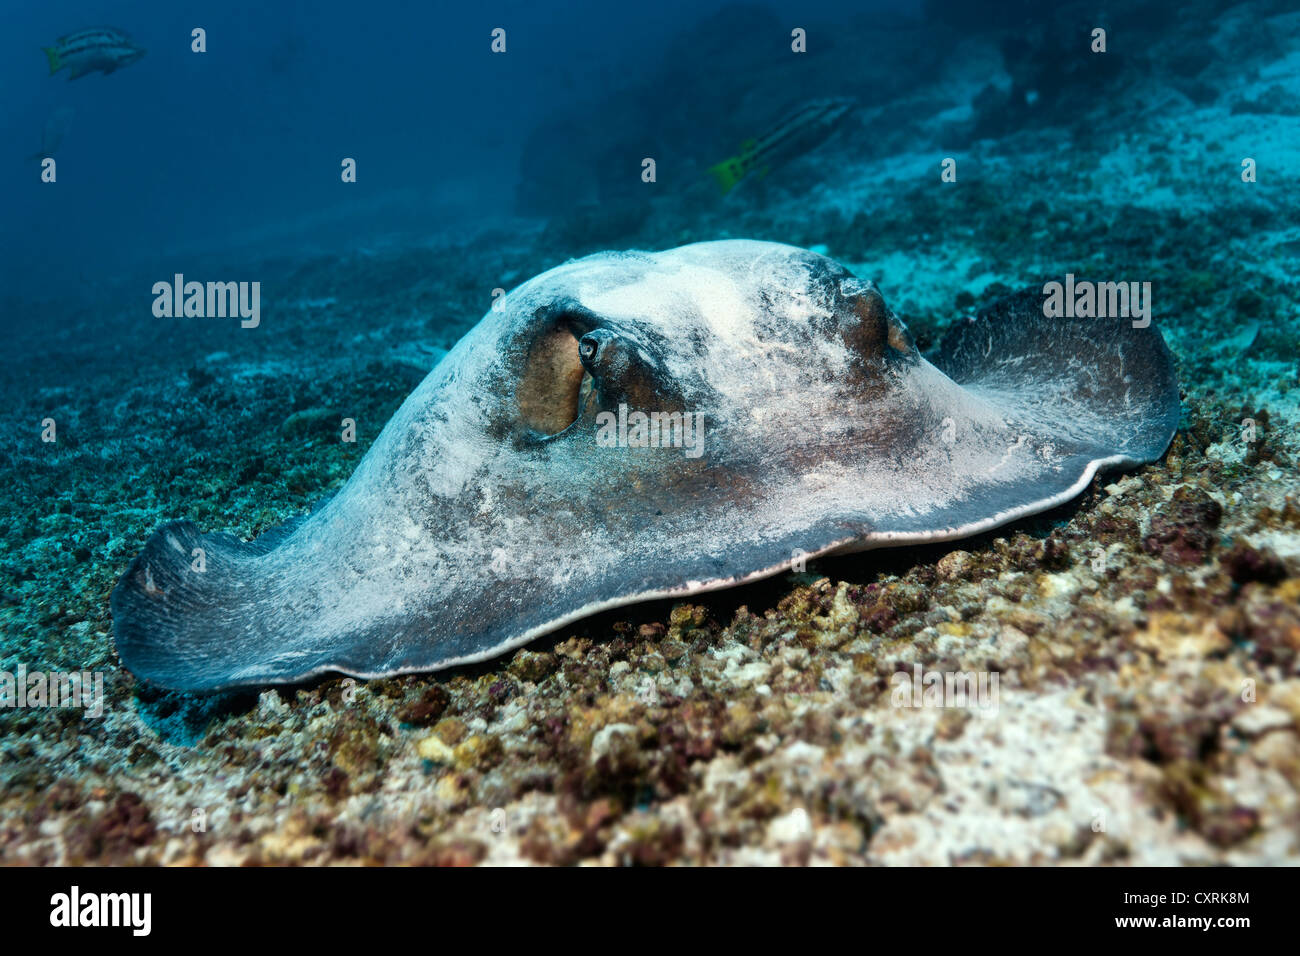 Diamond stingray (Dasyatis brevis), lying on the sandy seafloor with coral rubble, Punta Cormorant, Floreana Island Stock Photo